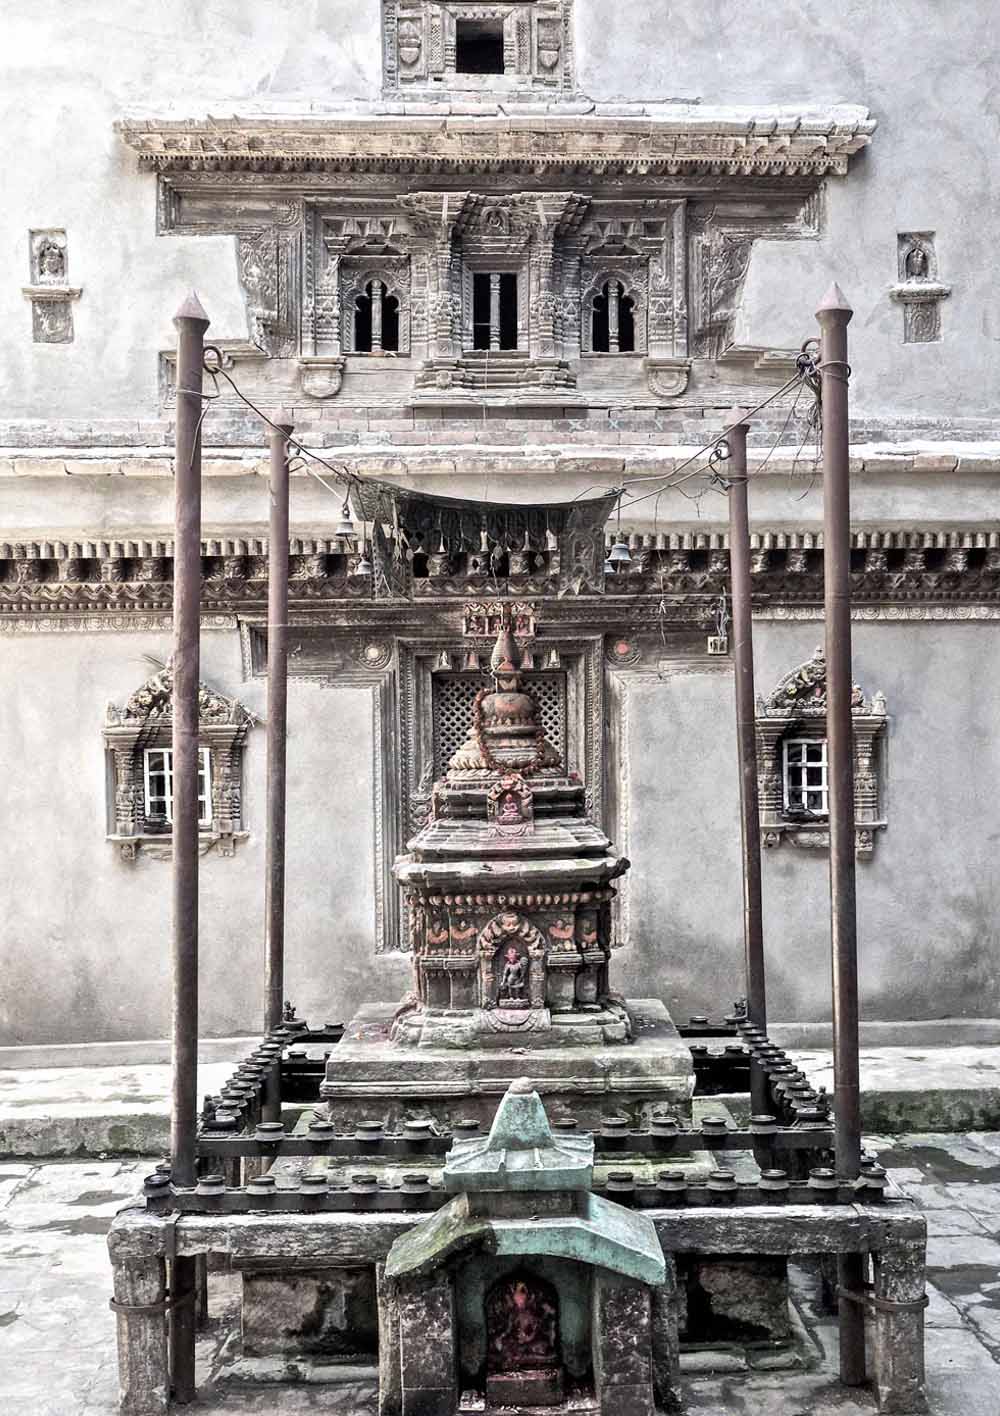 Patan Courtyard